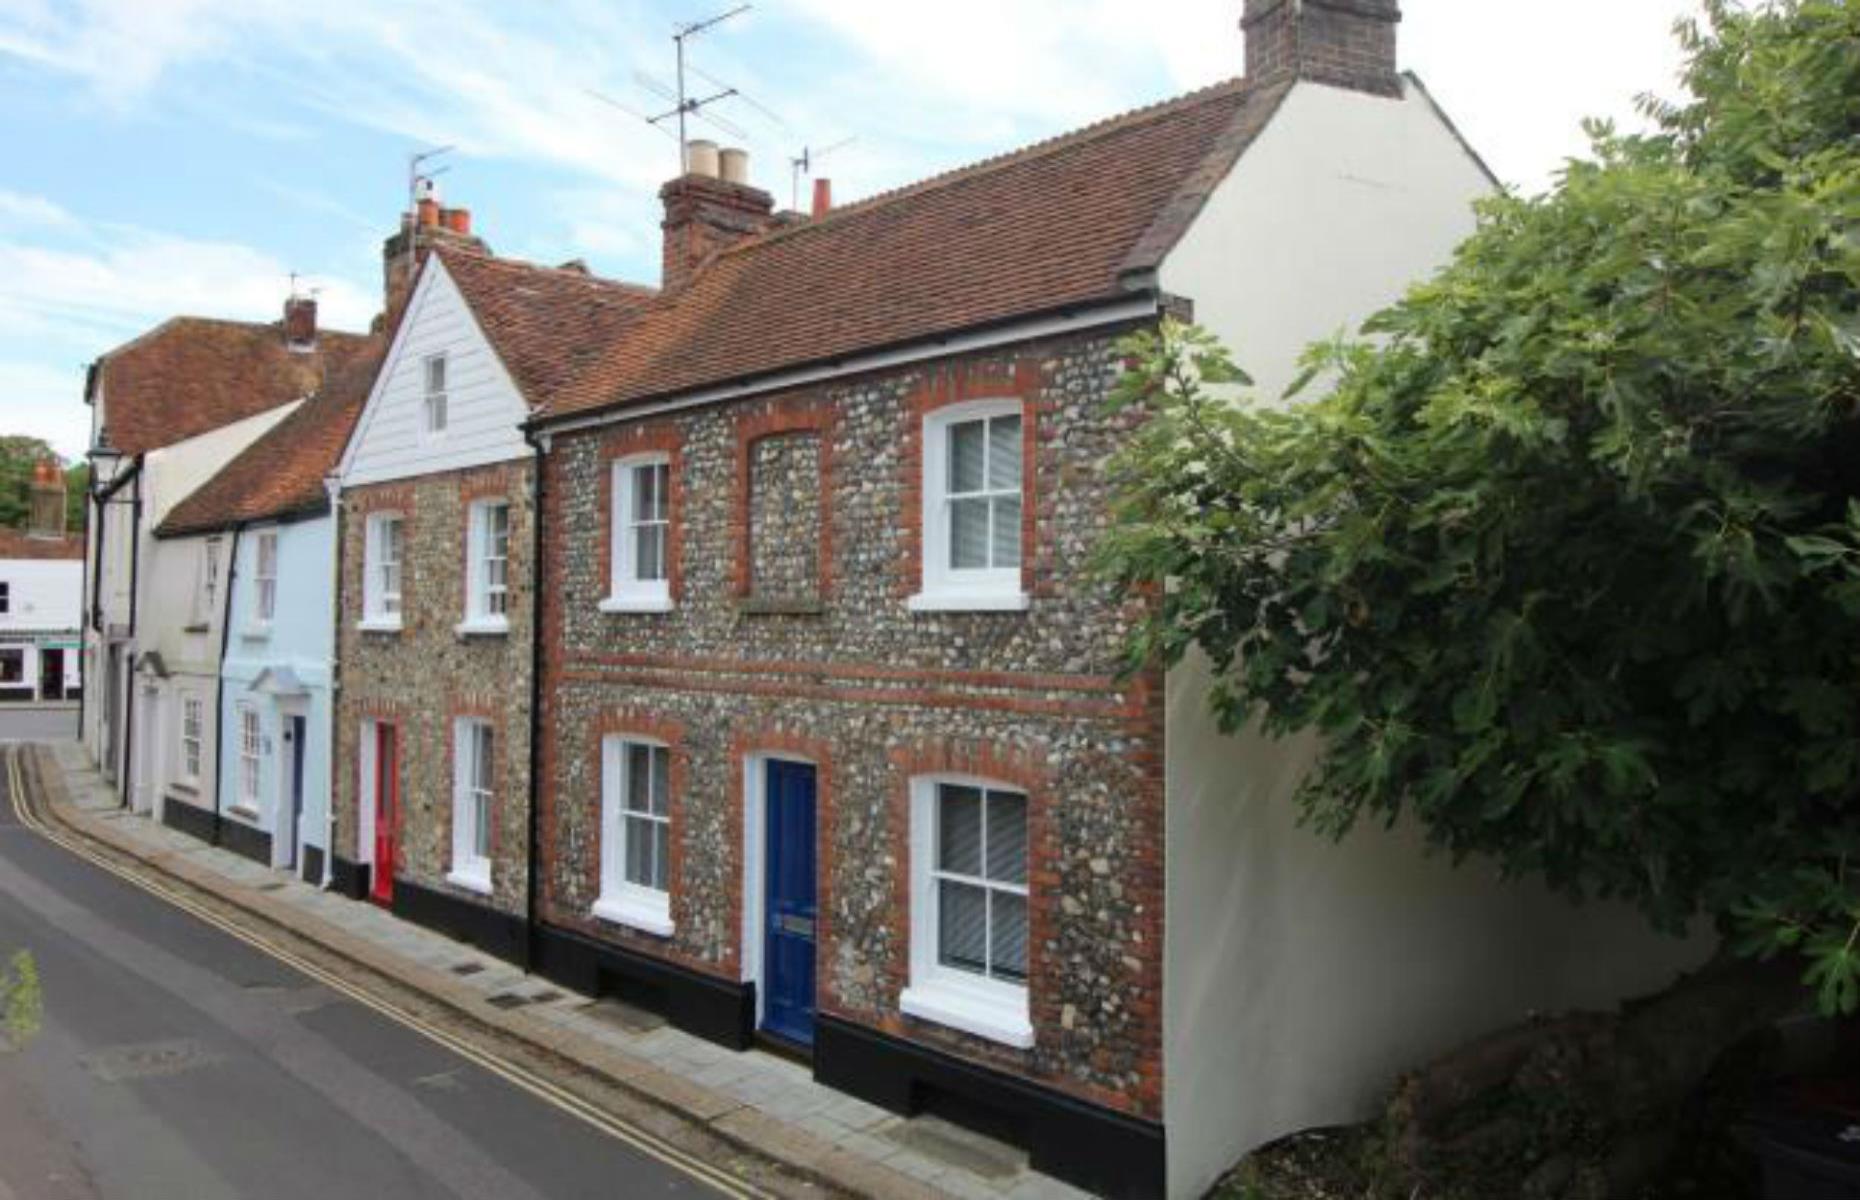 Chichester - average house price £375,000